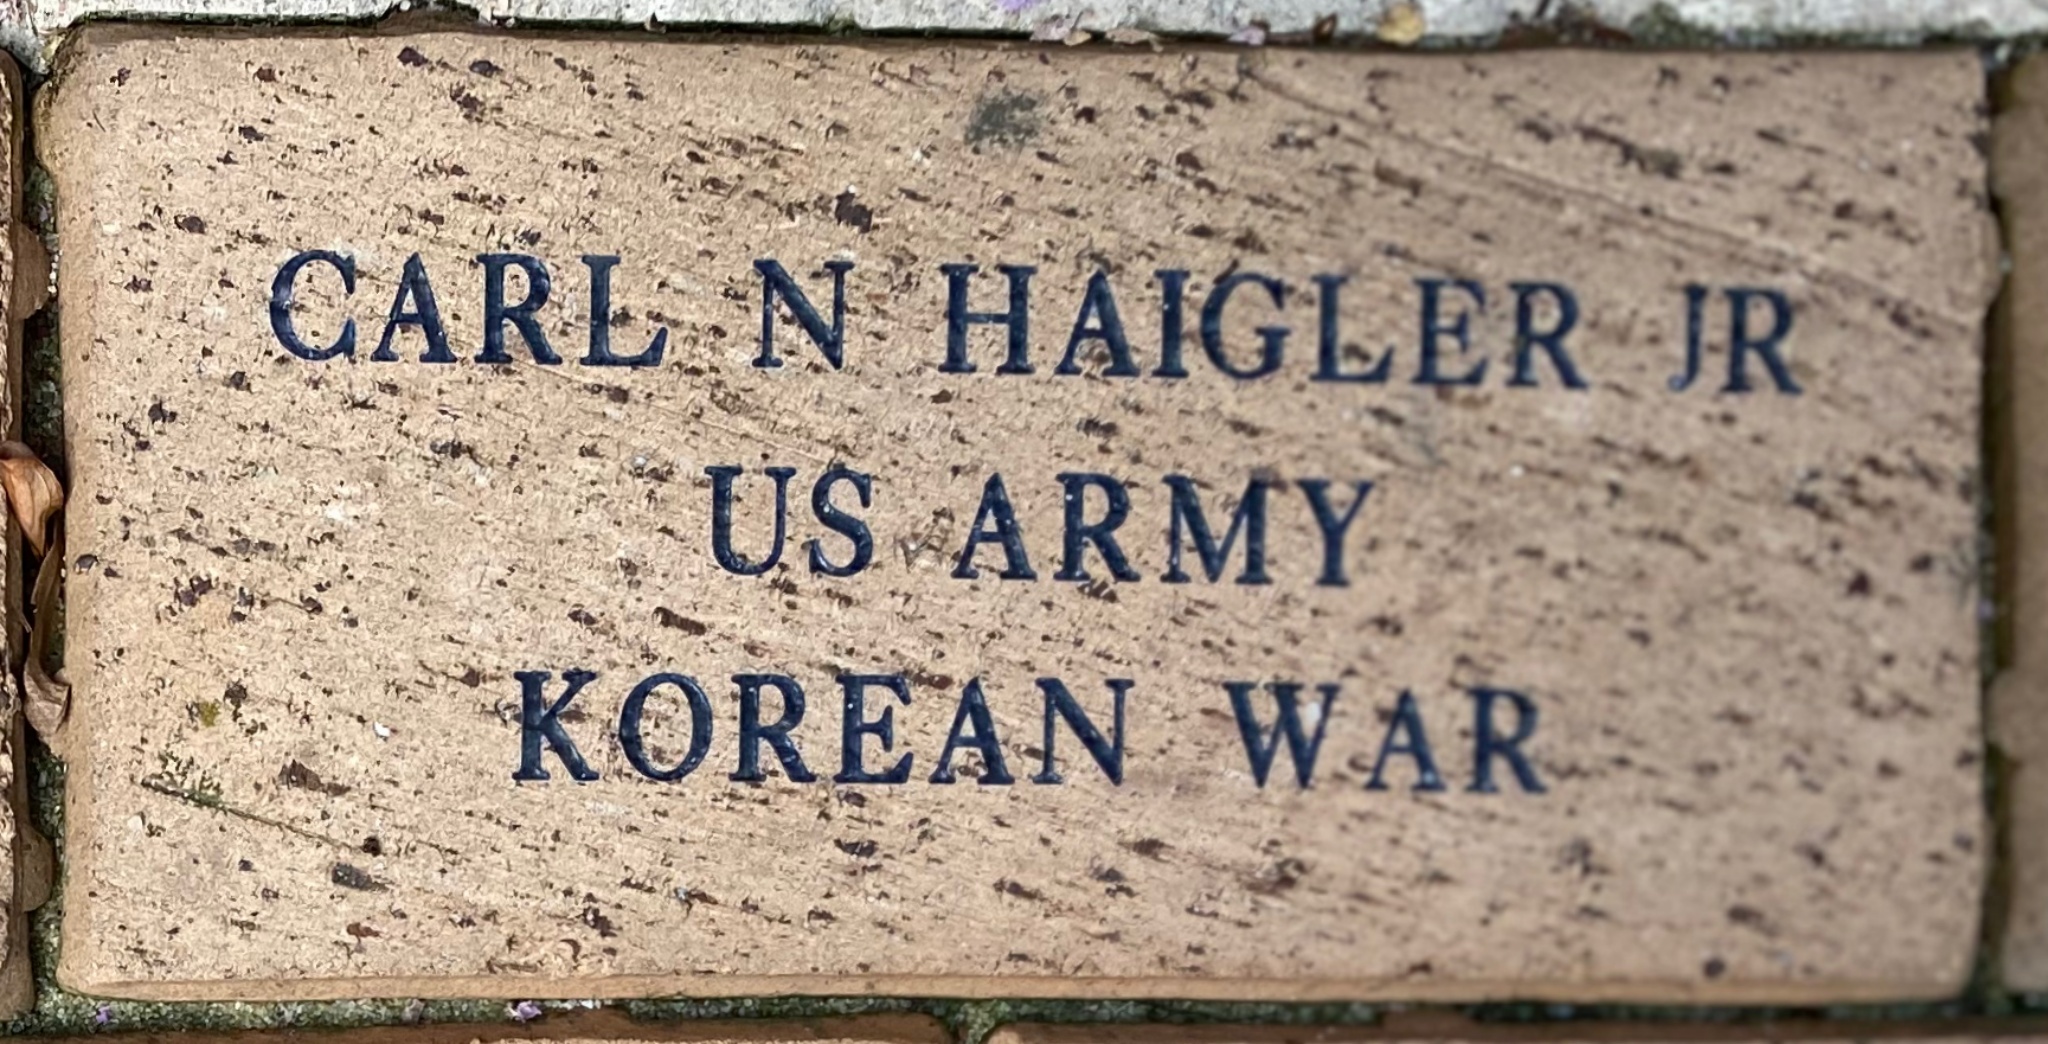 CARL N HAIGLER JR US ARMY KOREAN WAR